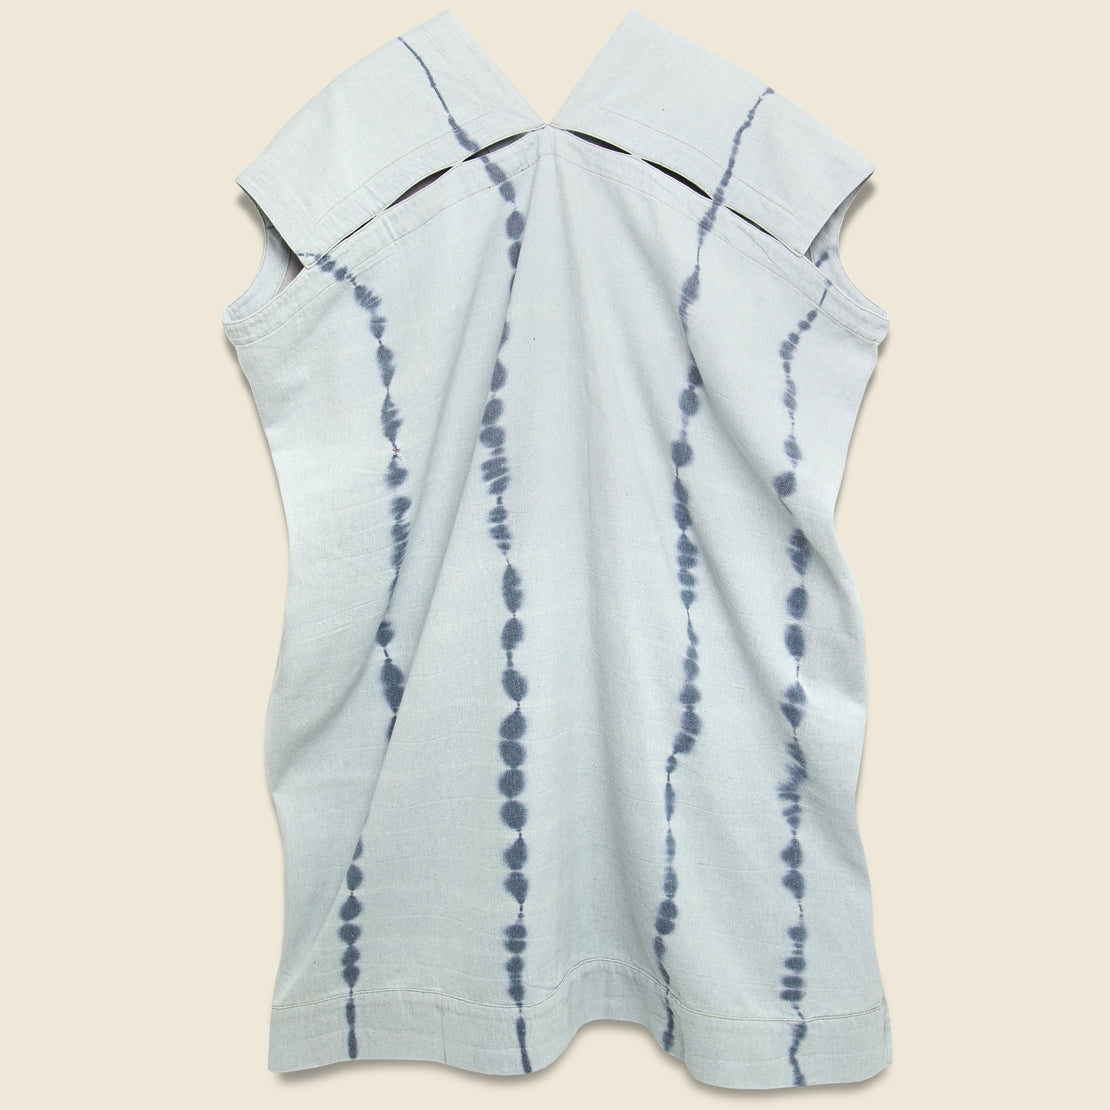 Crescent Dress - Ice Wash Tie Dye - Atelier Delphine - STAG Provisions - W - Onepiece - Dress